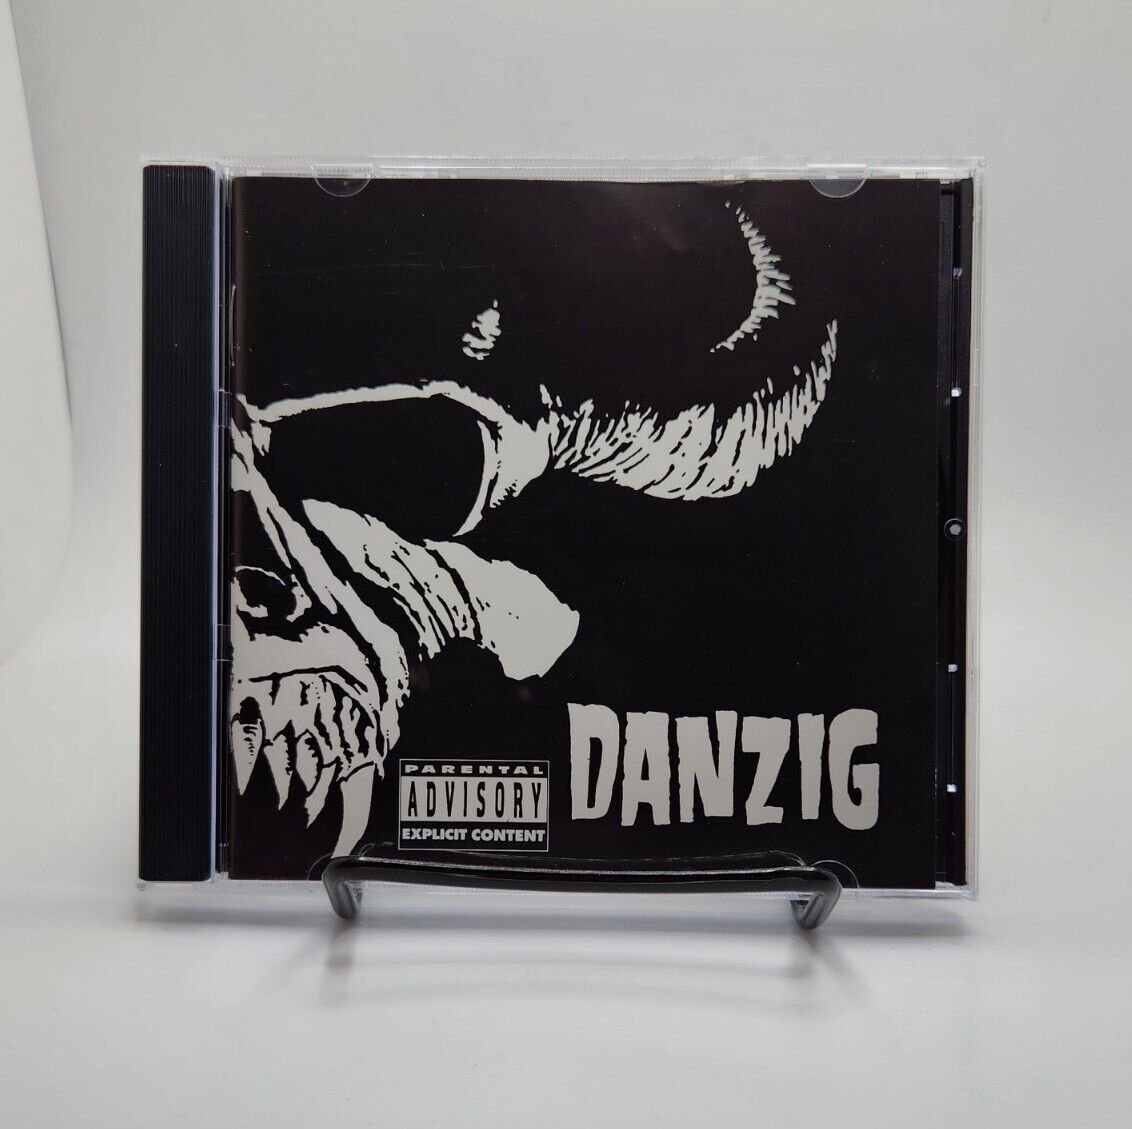 Danzig Music CD Explicit Content Parental Advisory 1988 American Recordings